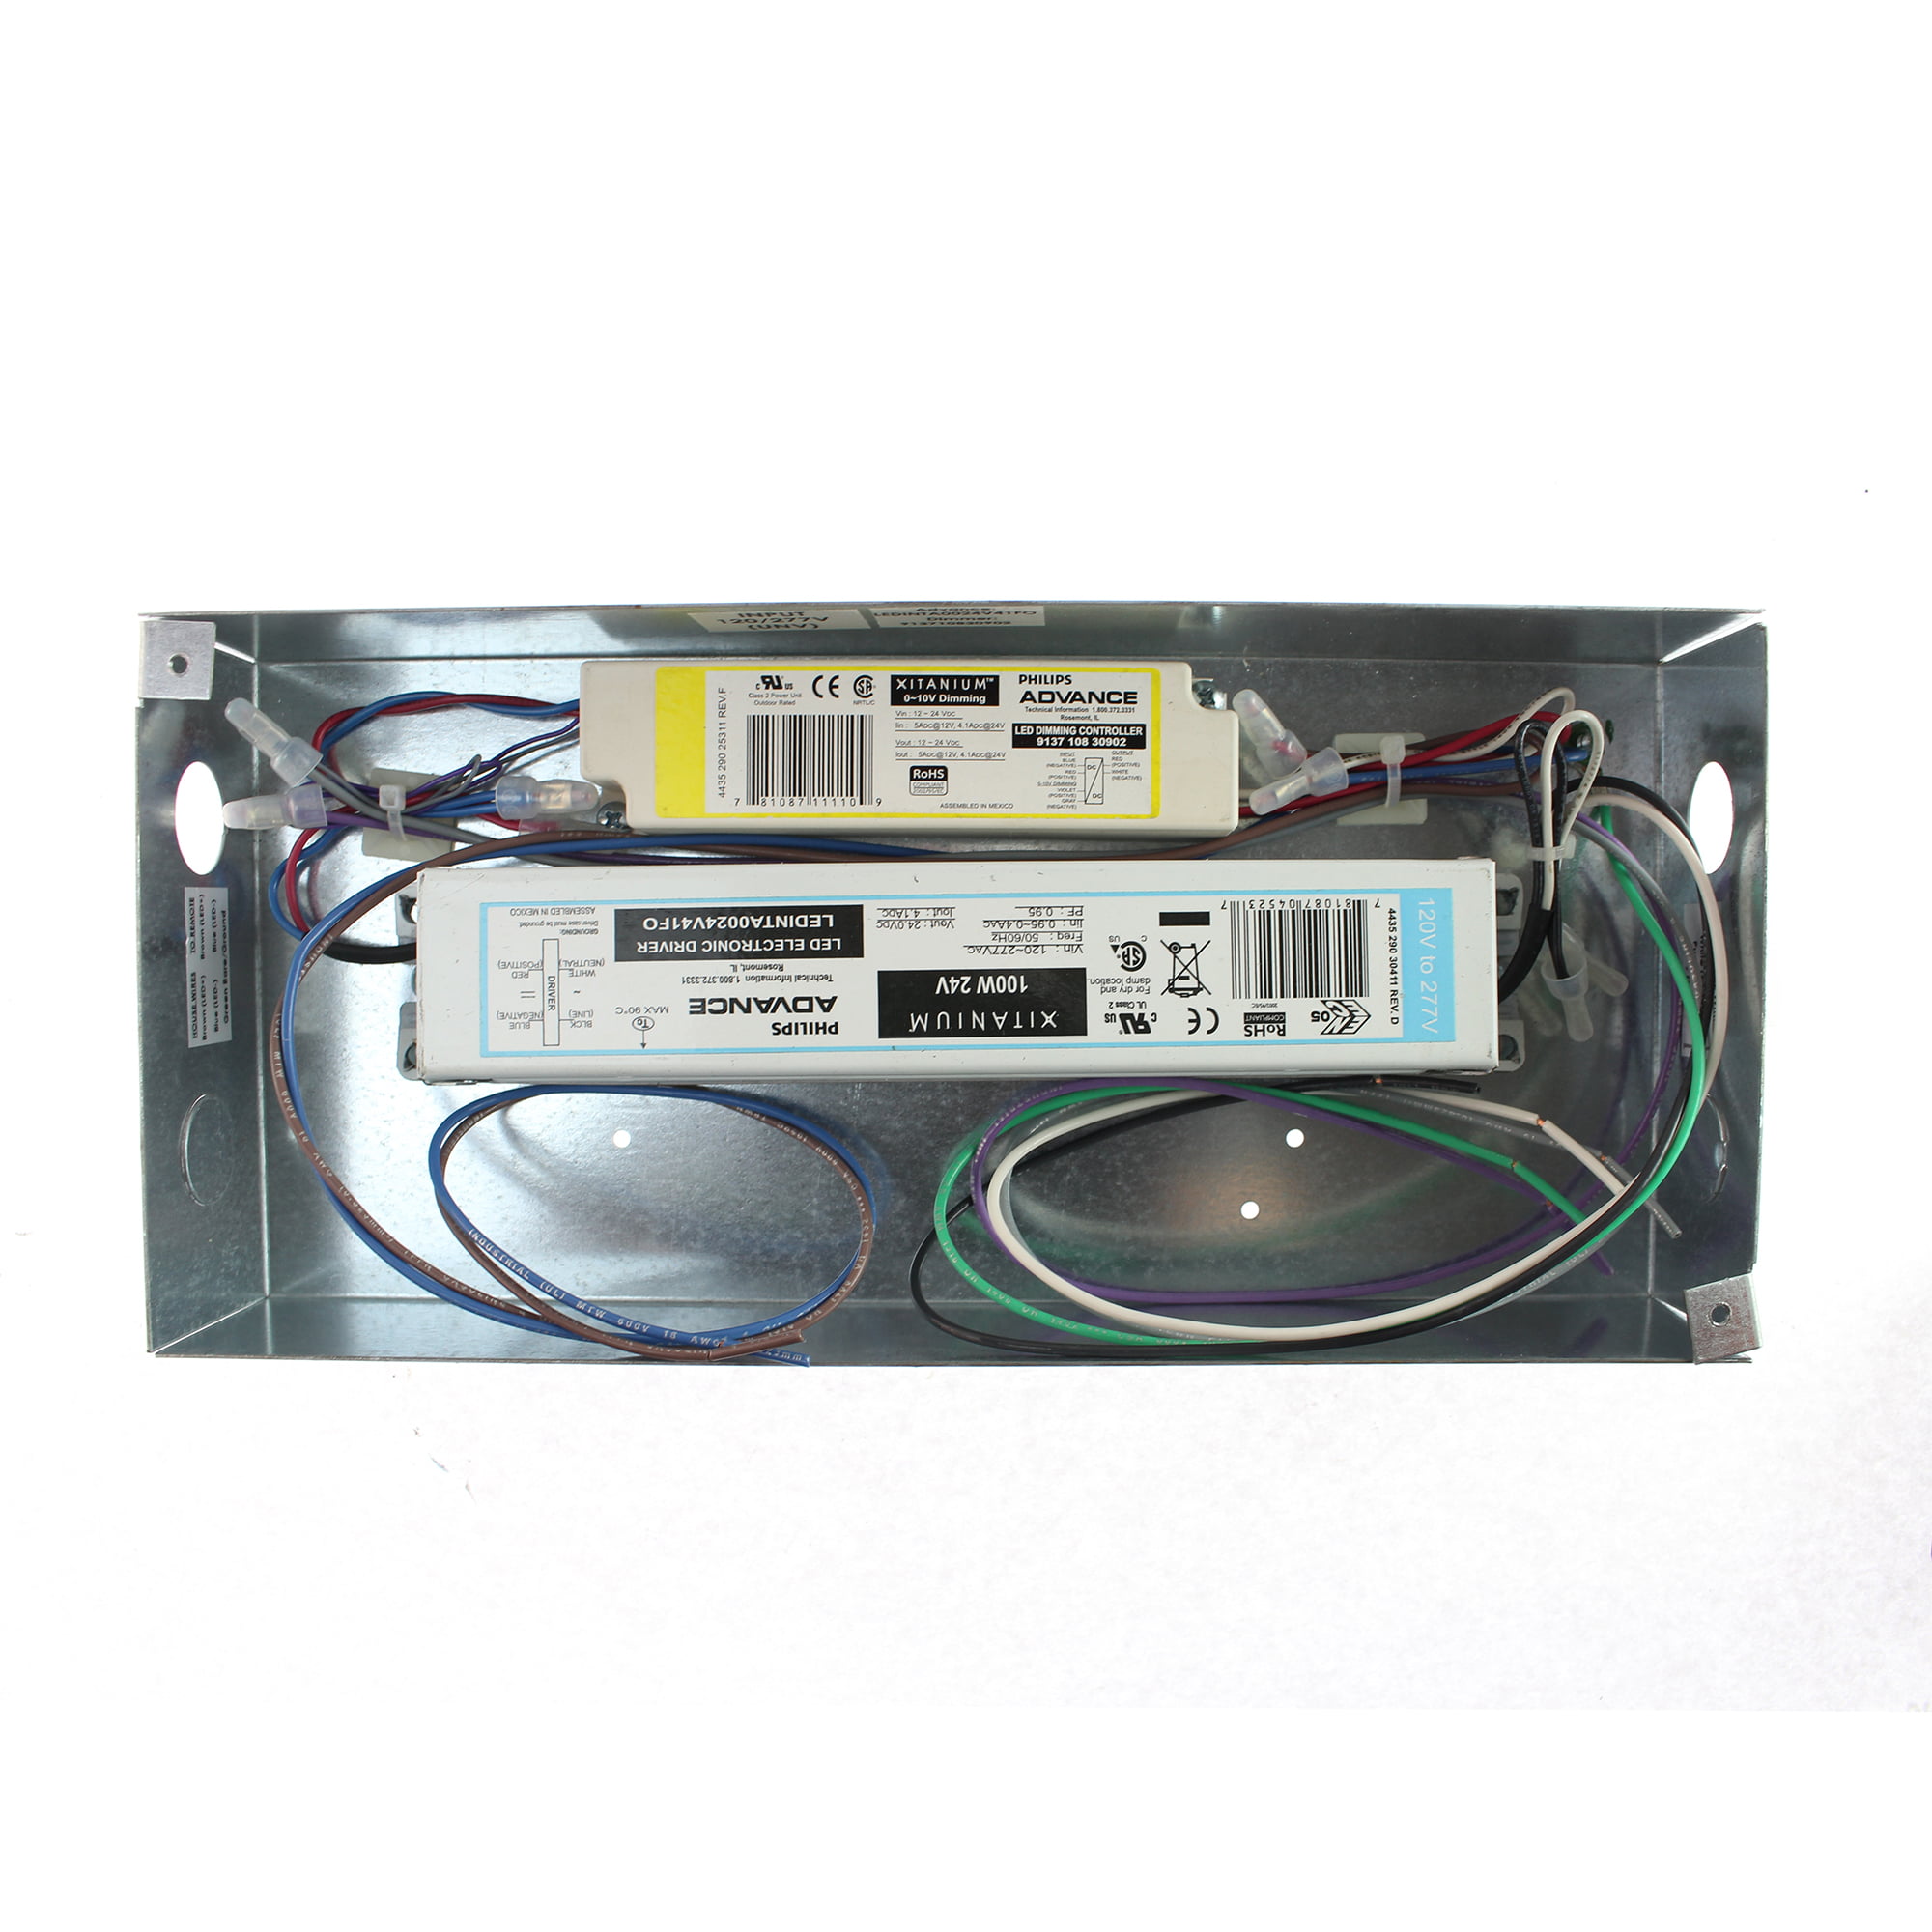 Advance LEDINTA0024V41FO Xitanium LED Driver power supply in Life Extender Box